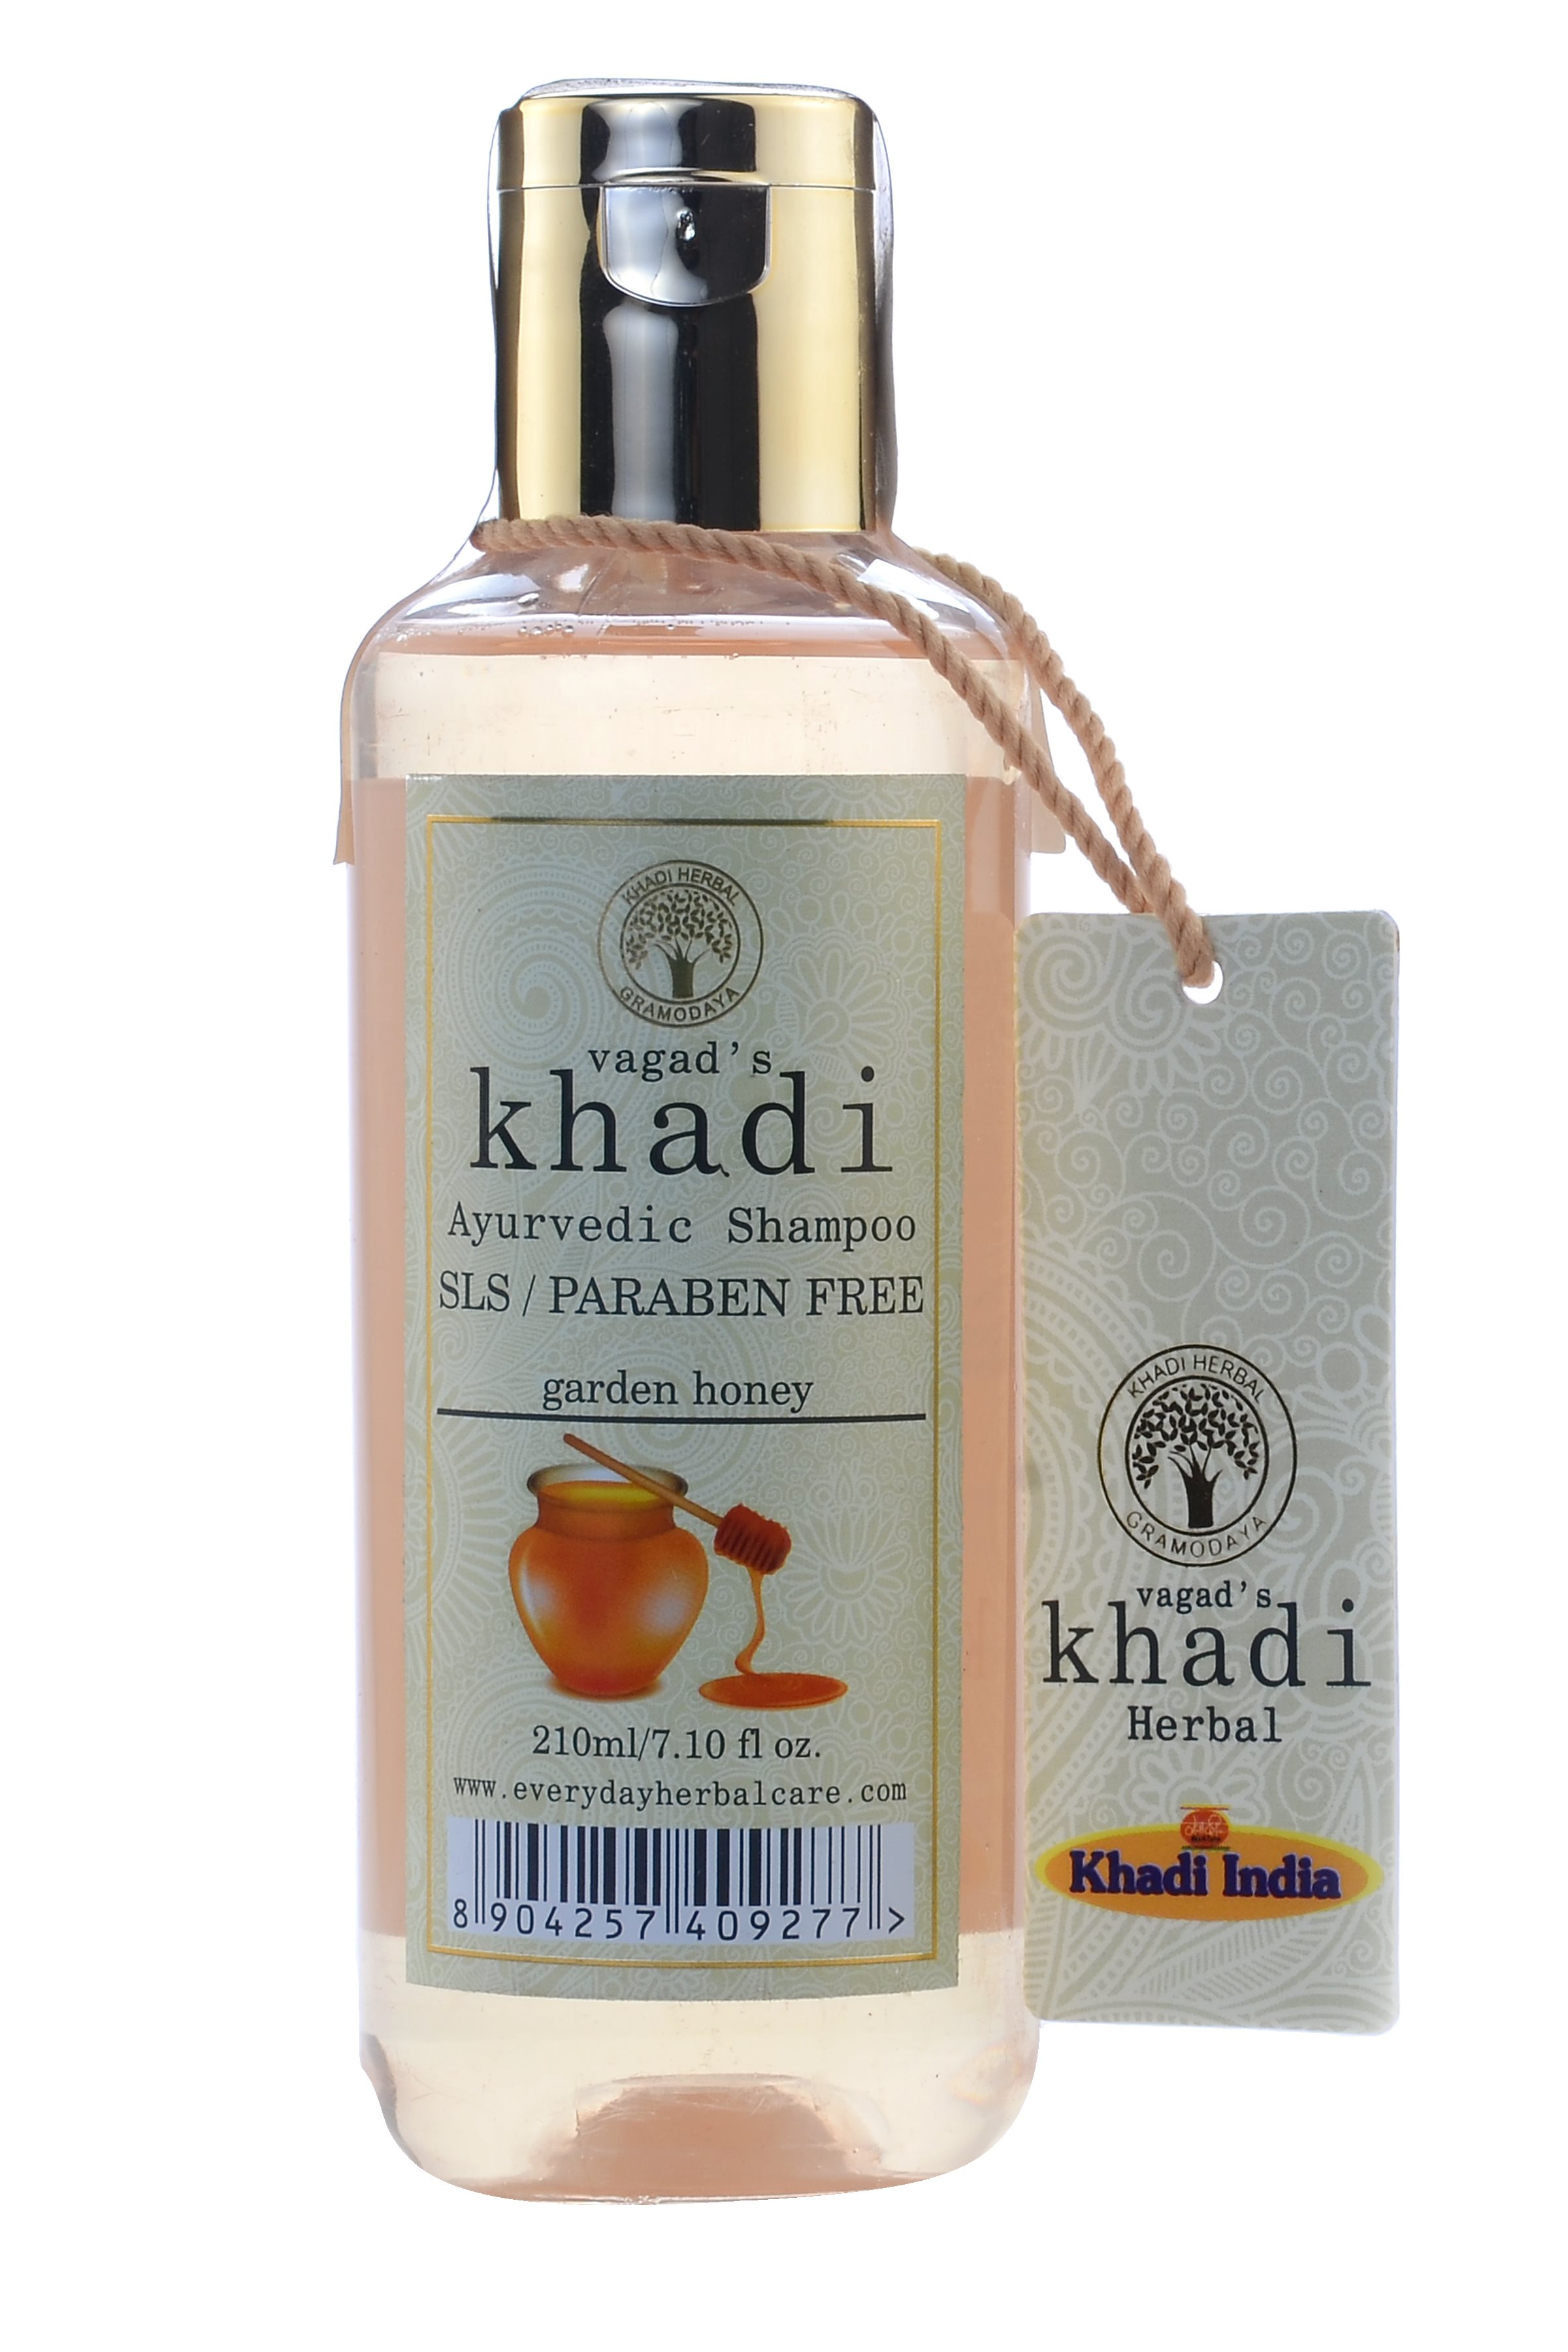 Vagad's Khadi S.L.S And Paraben Free Garden Honey Shampoo